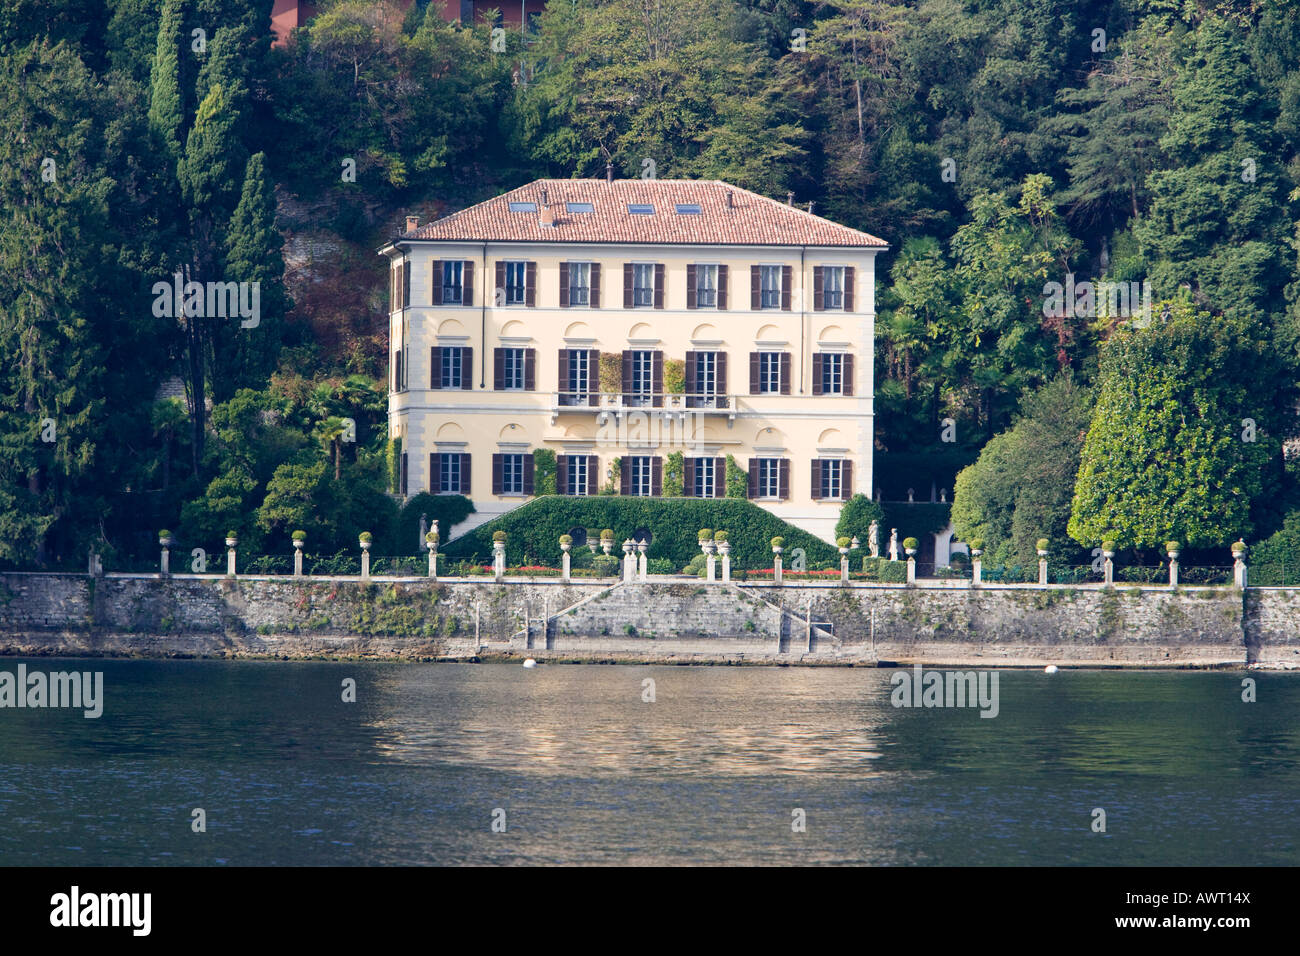 Donatella Versace Villa Lake Como Italy Stock Photo - Alamy